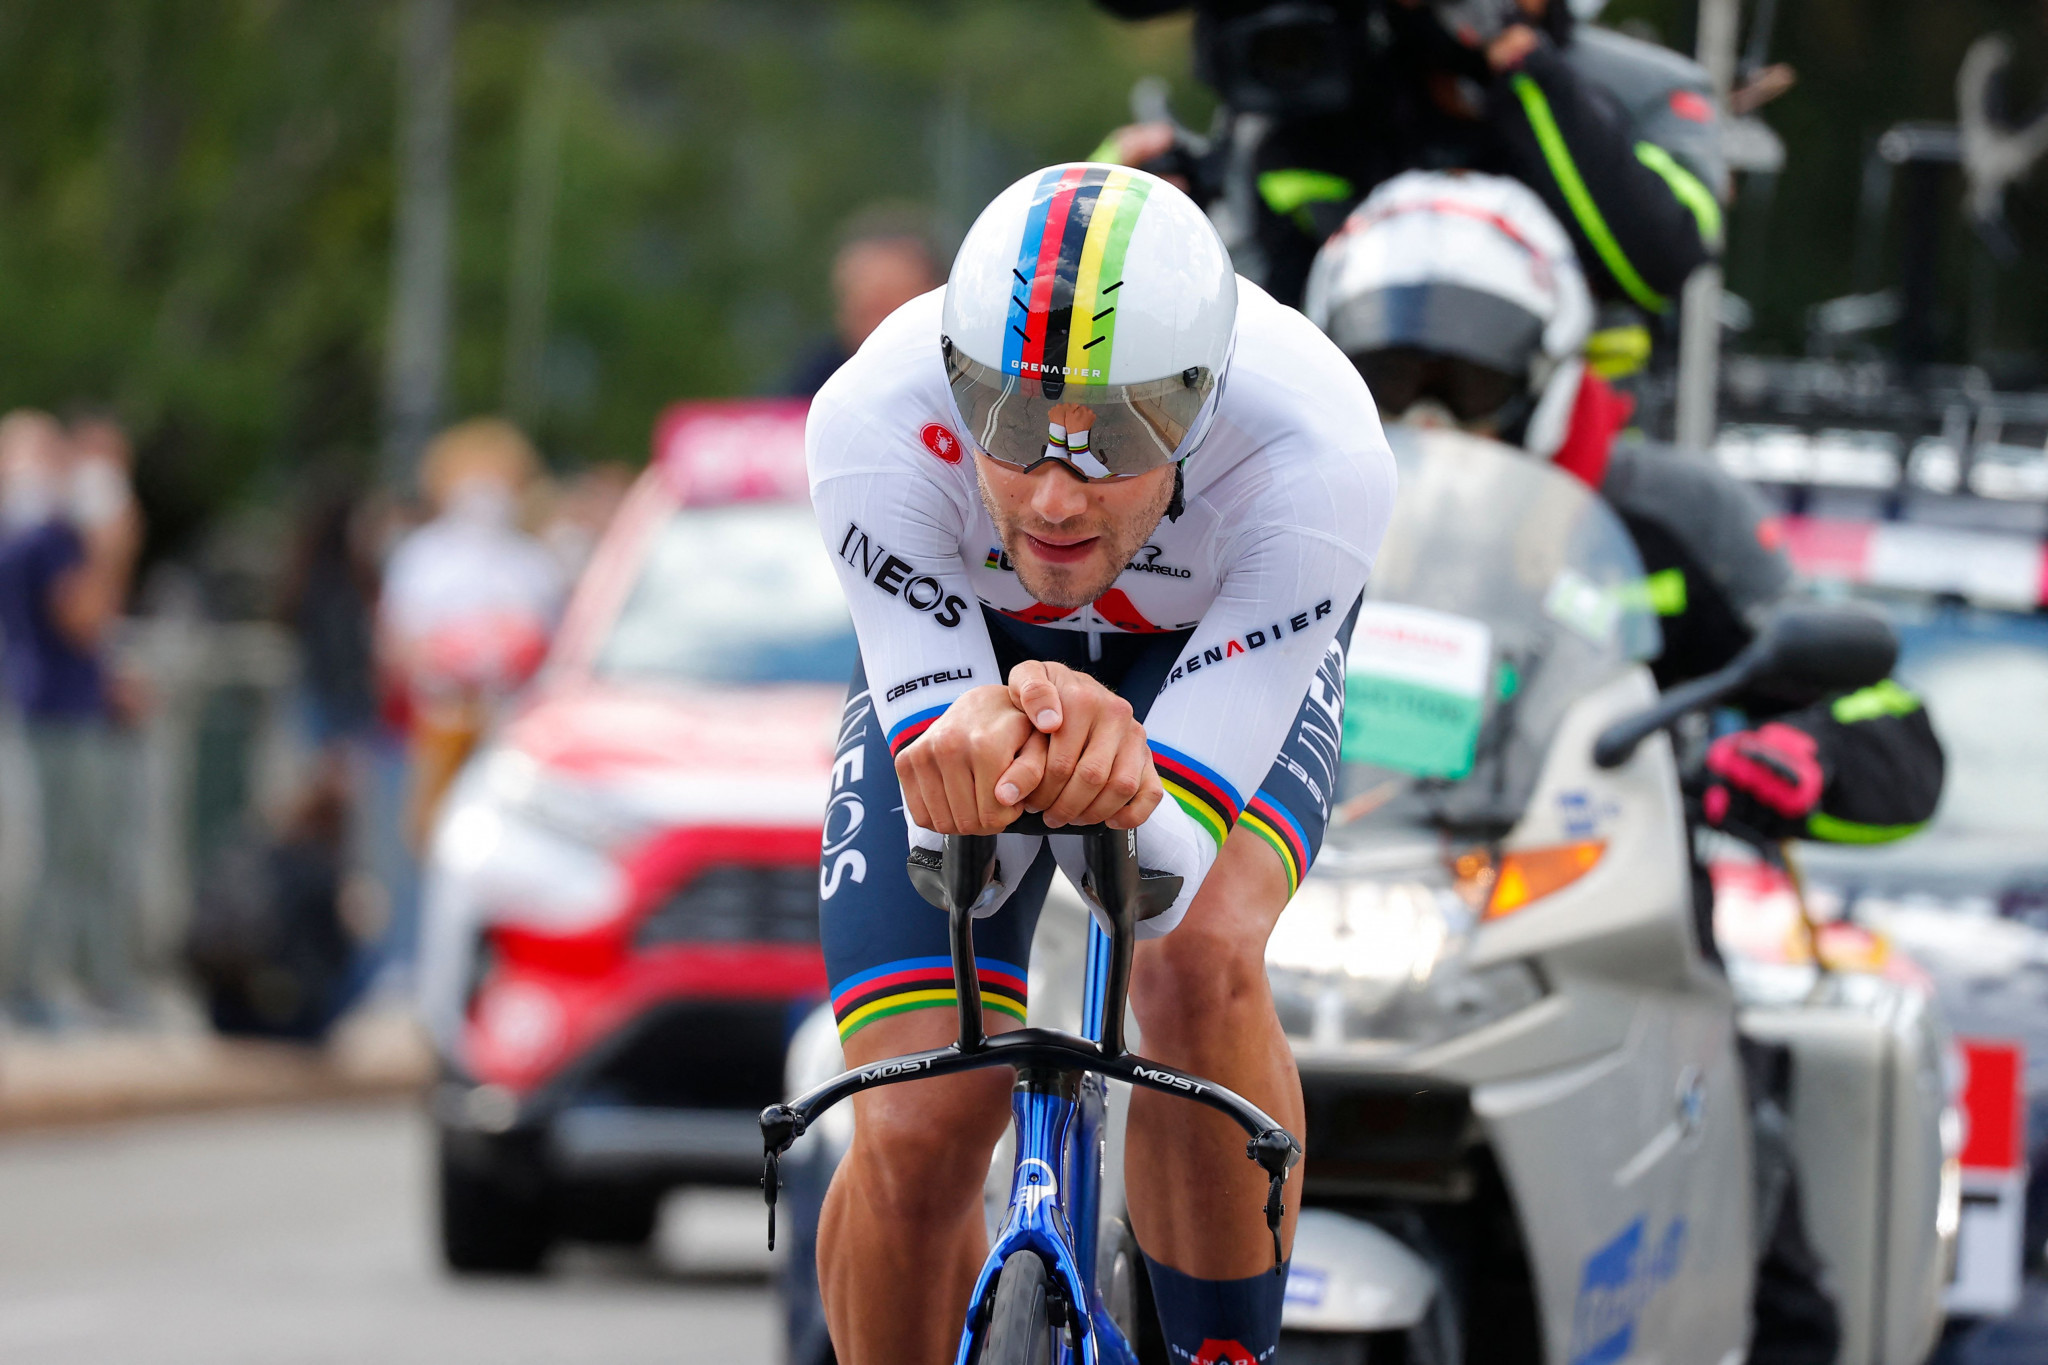 Ganna wins individual time trial in Turin as Giro d'Italia begins